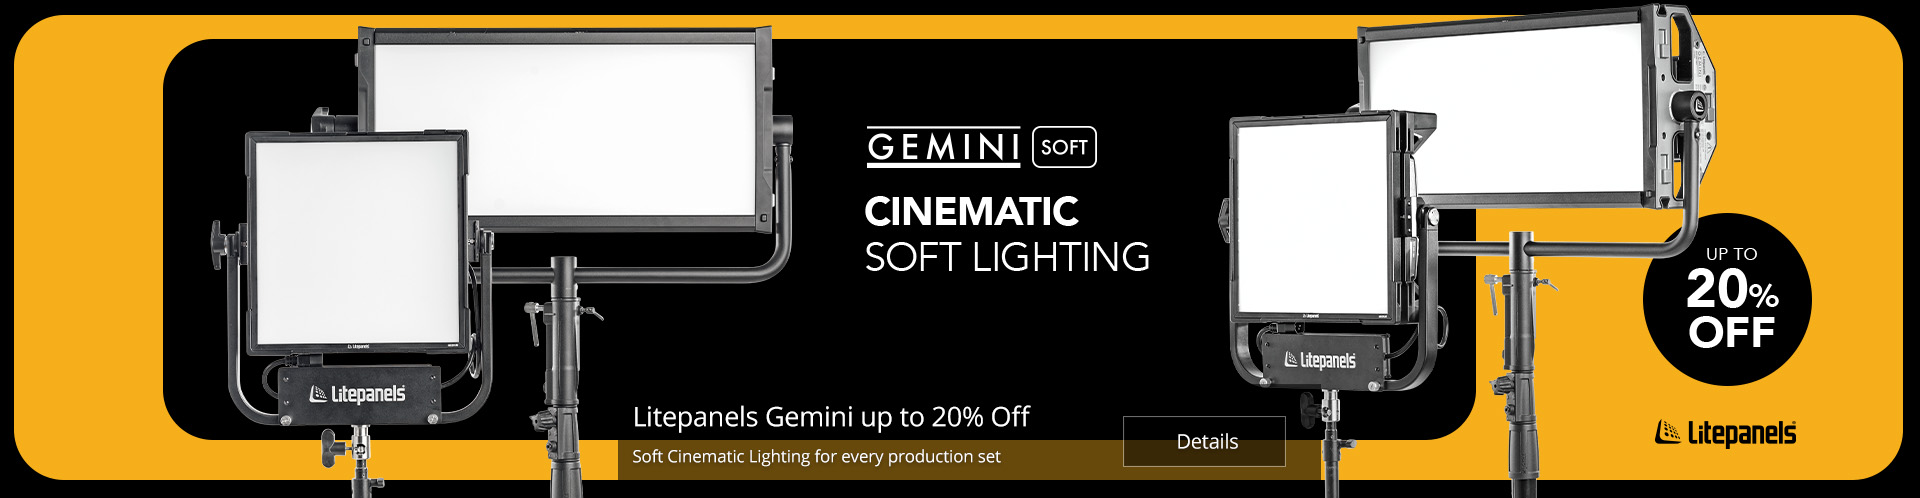 Litepanels Gemini Promotion